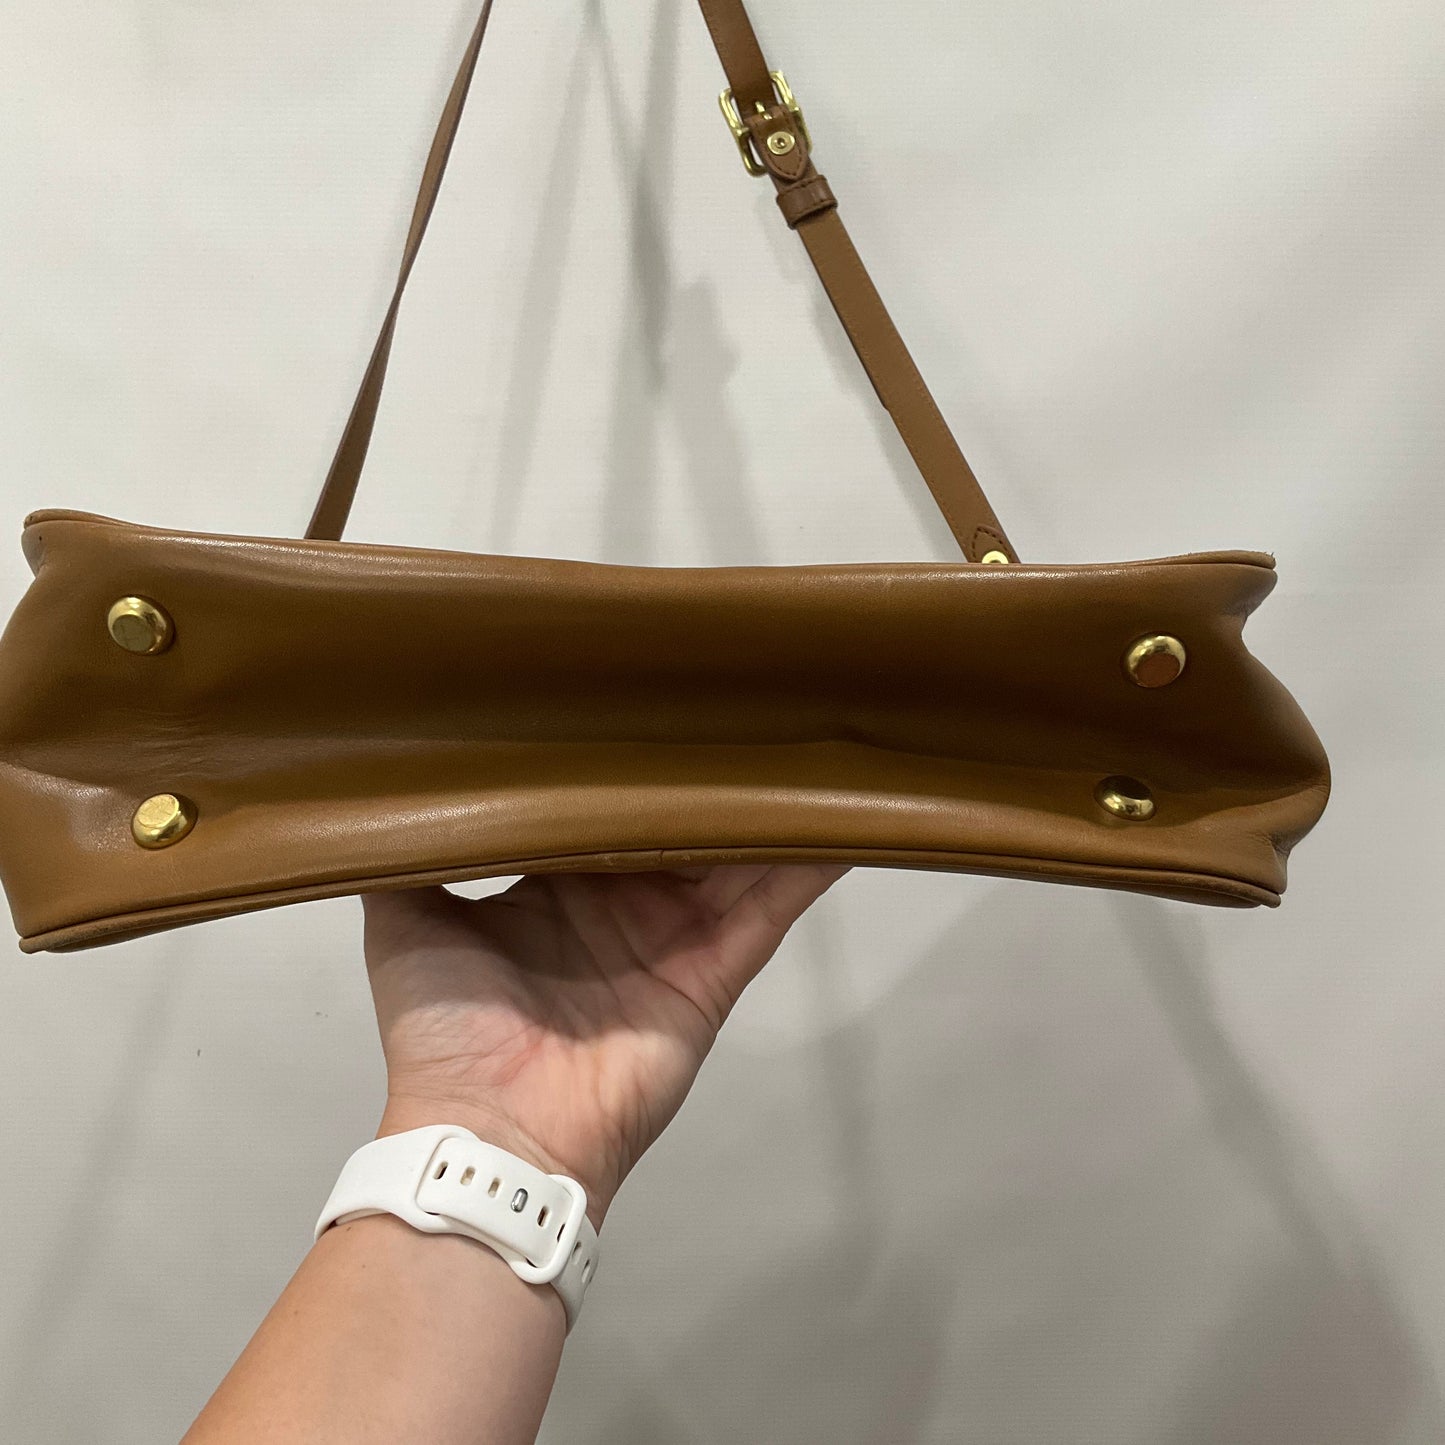 Handbag Designer jw hulme, Size Medium